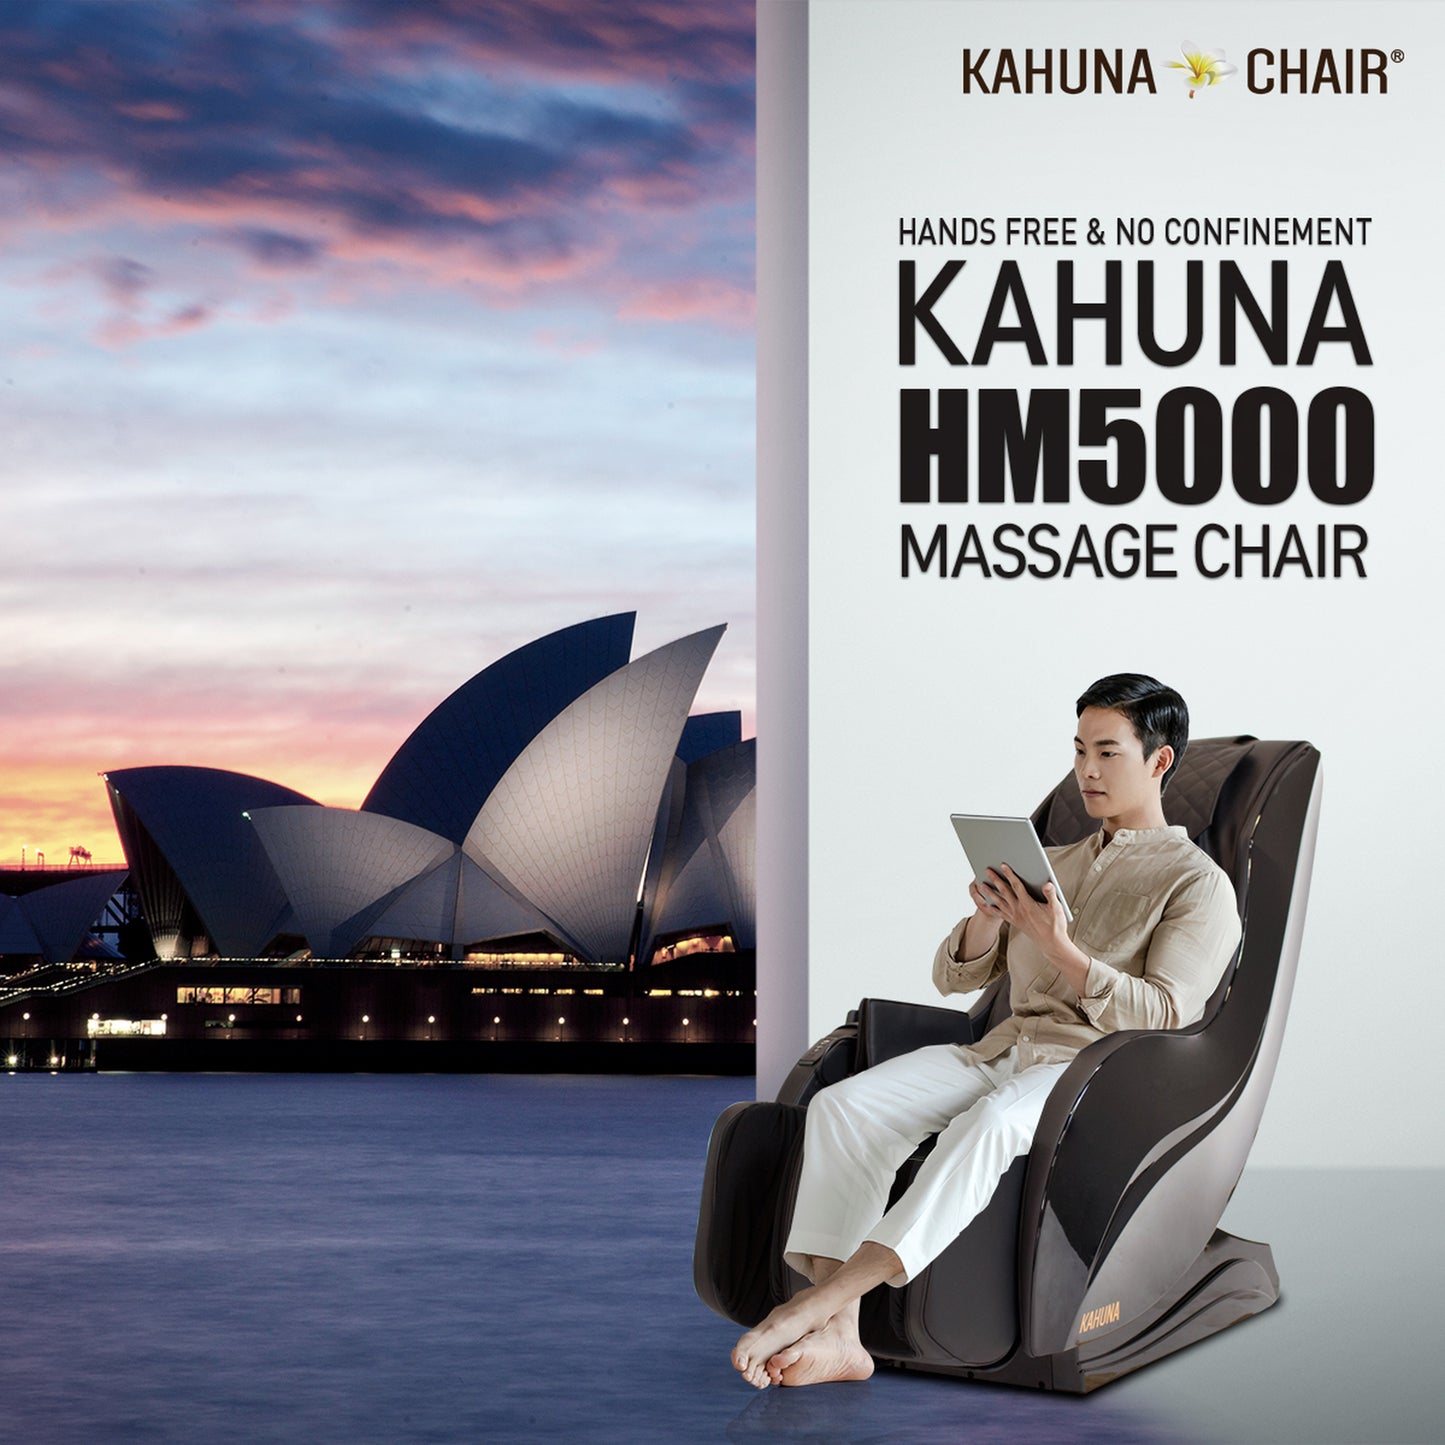 Kahuna HM-5000 Slender Style SL-Track Massage Chair